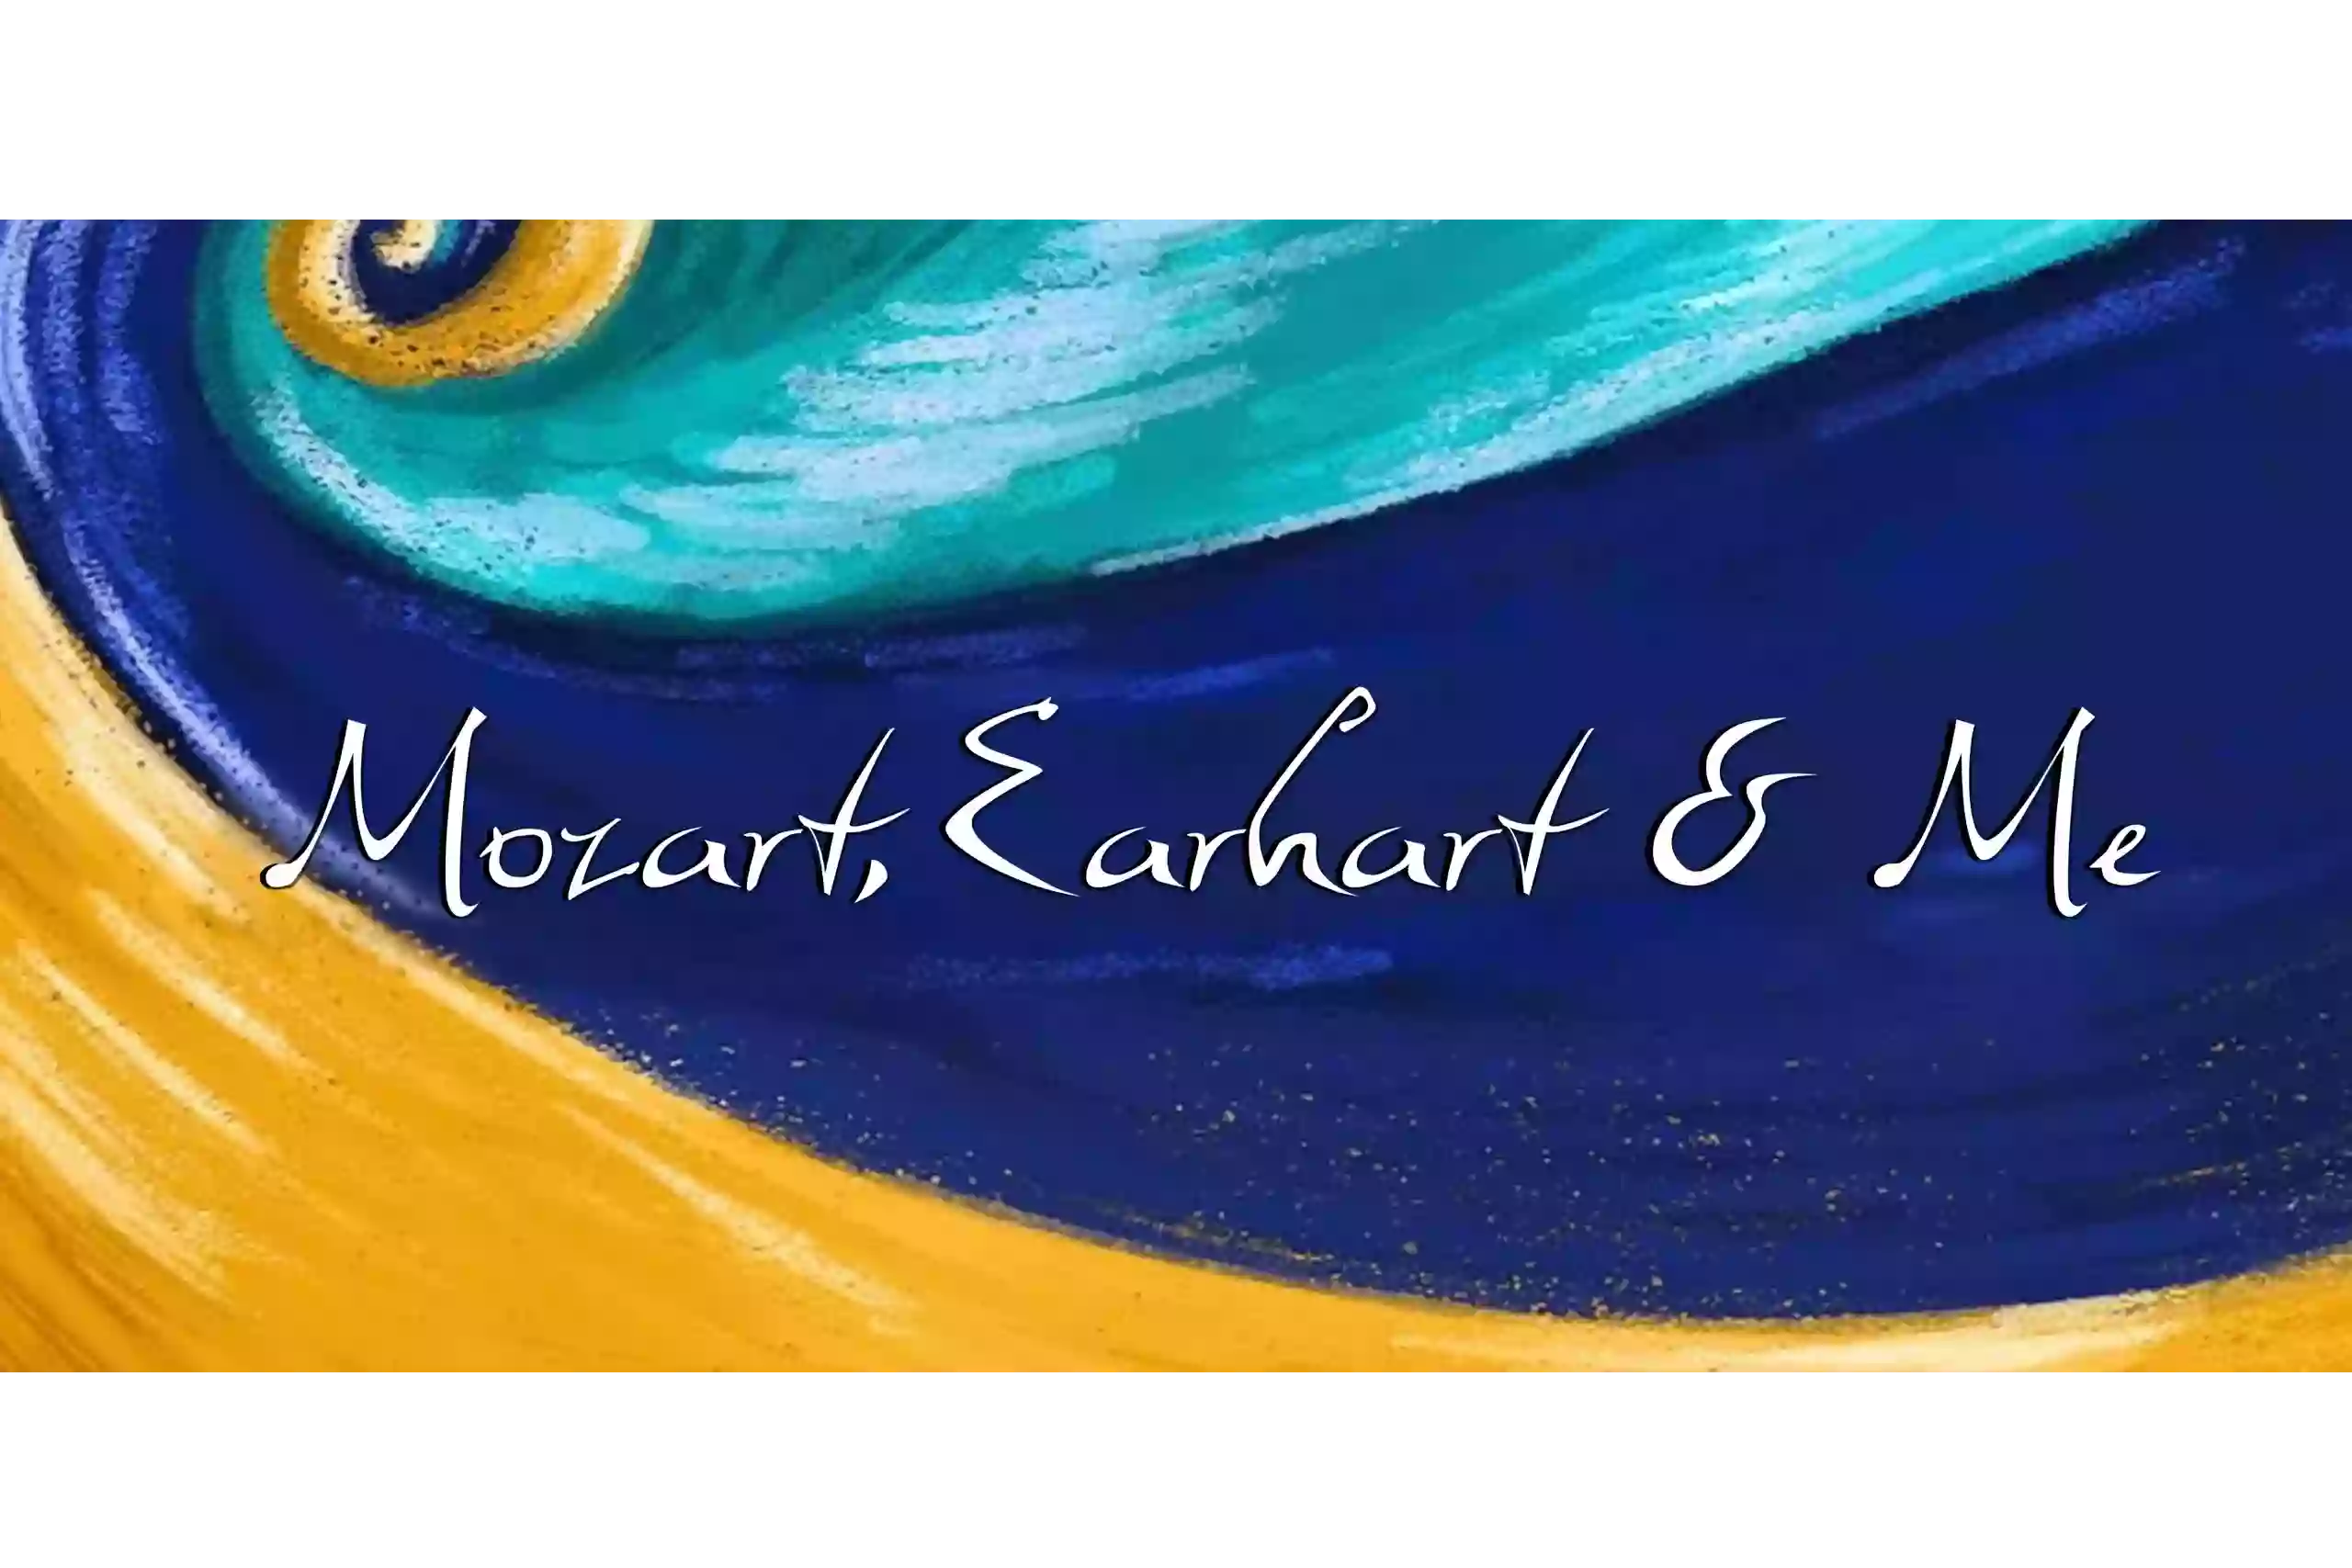 Mozart, Earhart & Me